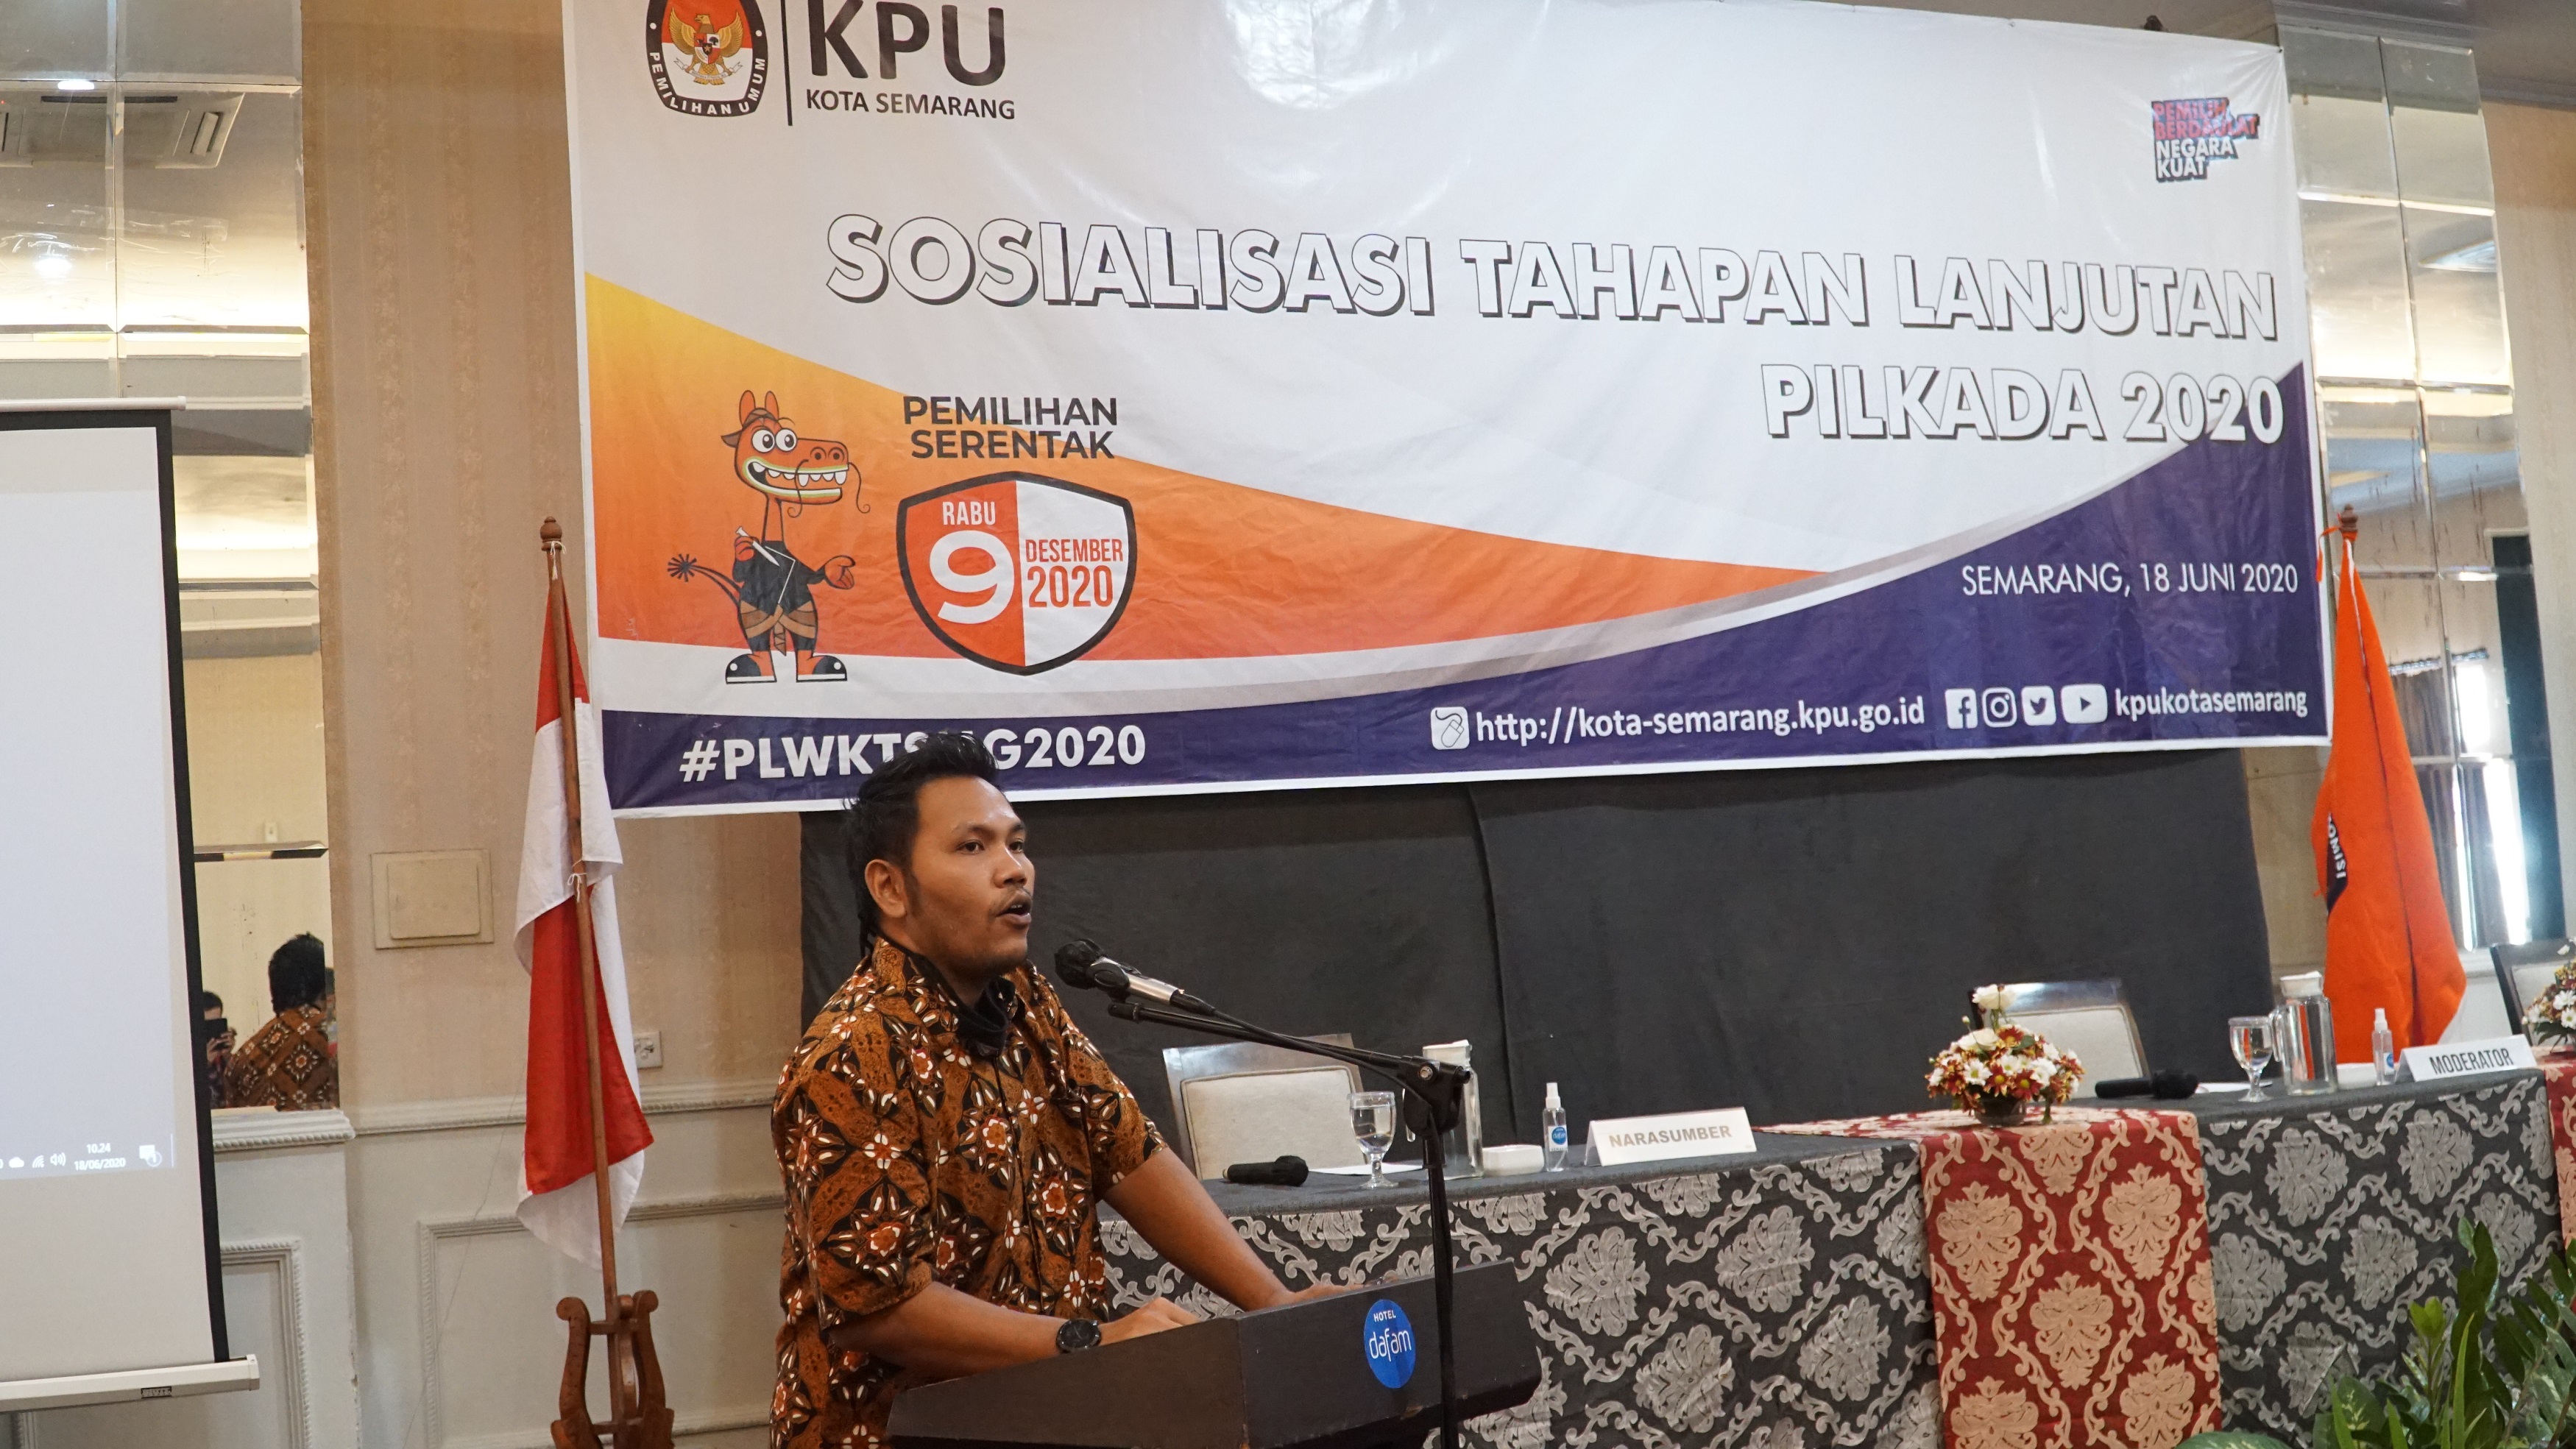 Sosialisasi Tahapan Lanjutan Pilkada 2020 di Hotel Dafam Semarang